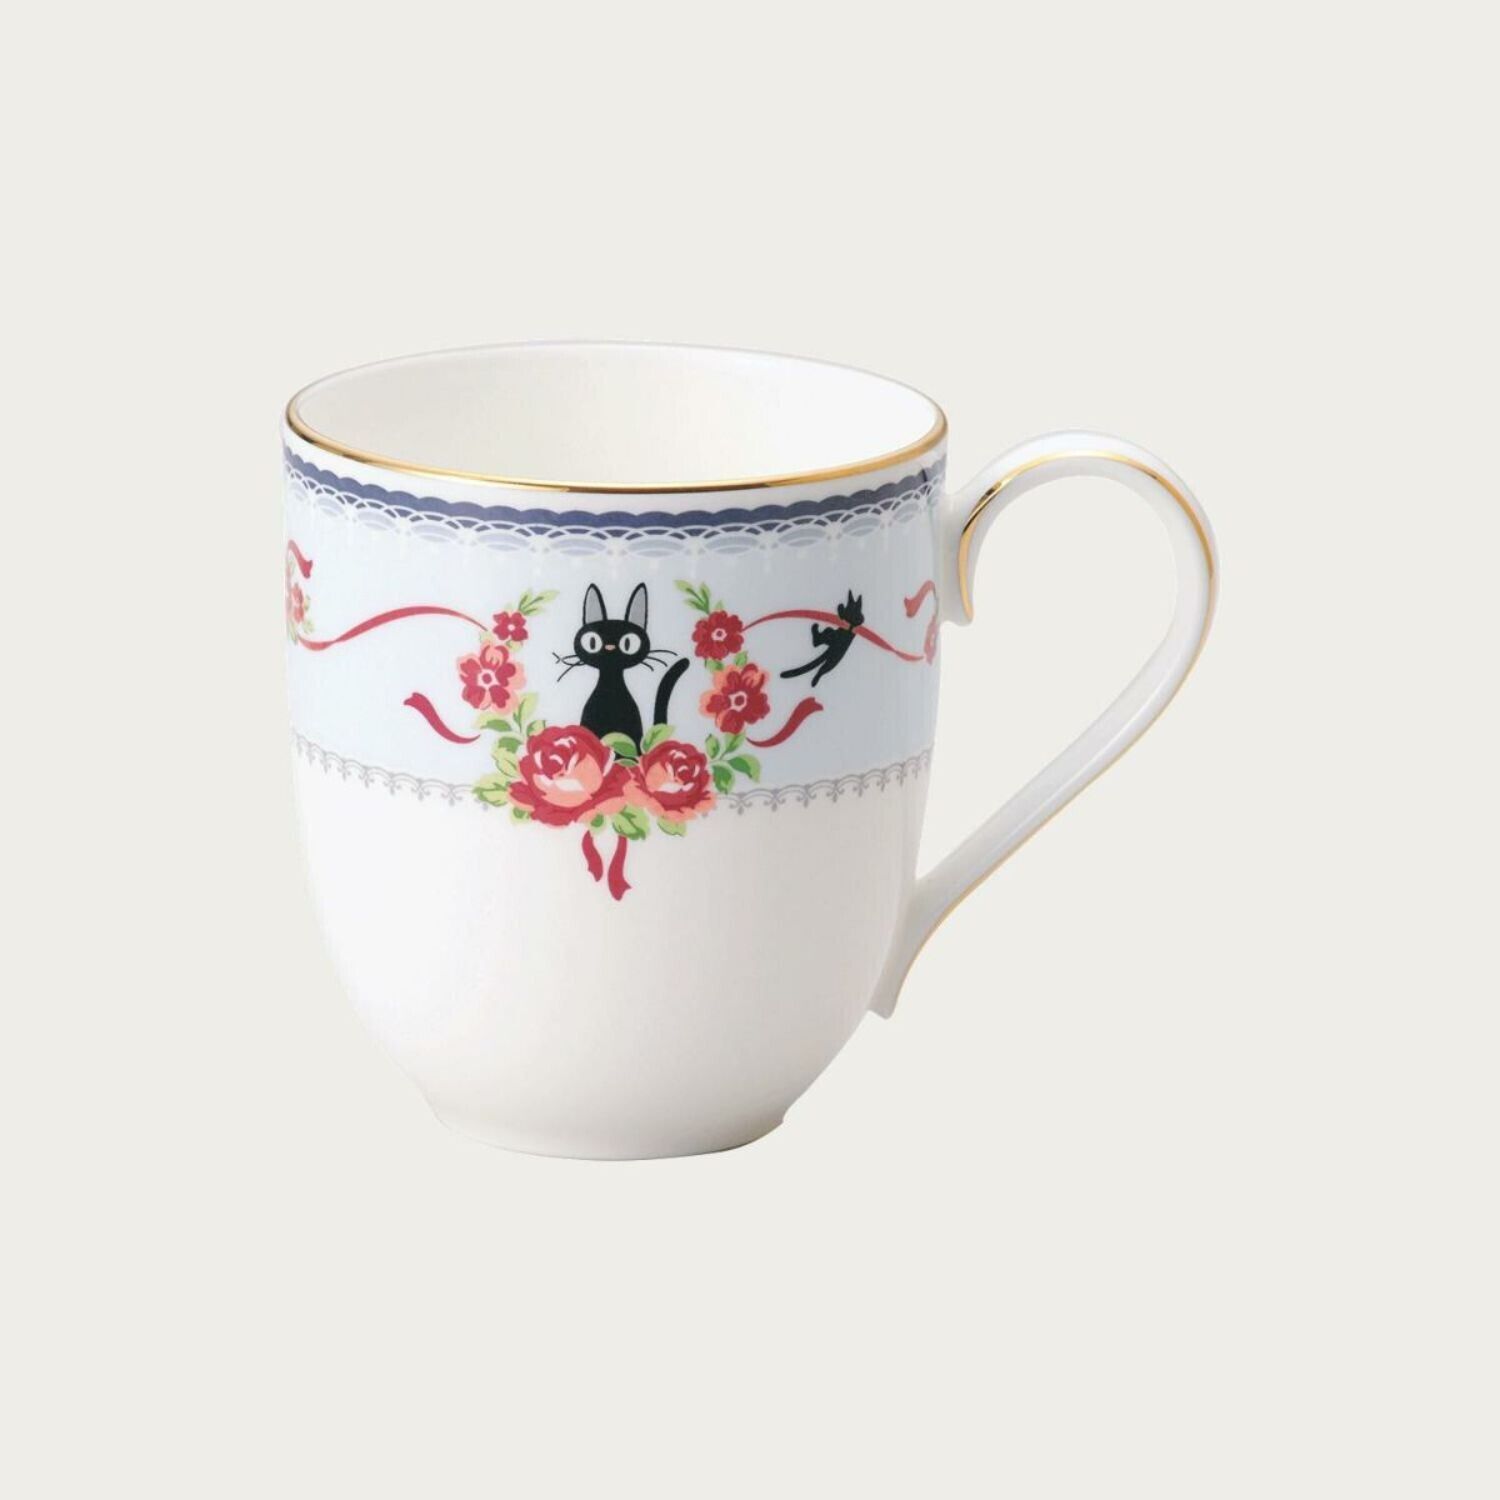 Kiki\'s Delivery Service Mug Cup Tea Cup Jiji Blue Studio Ghibli Tableware New